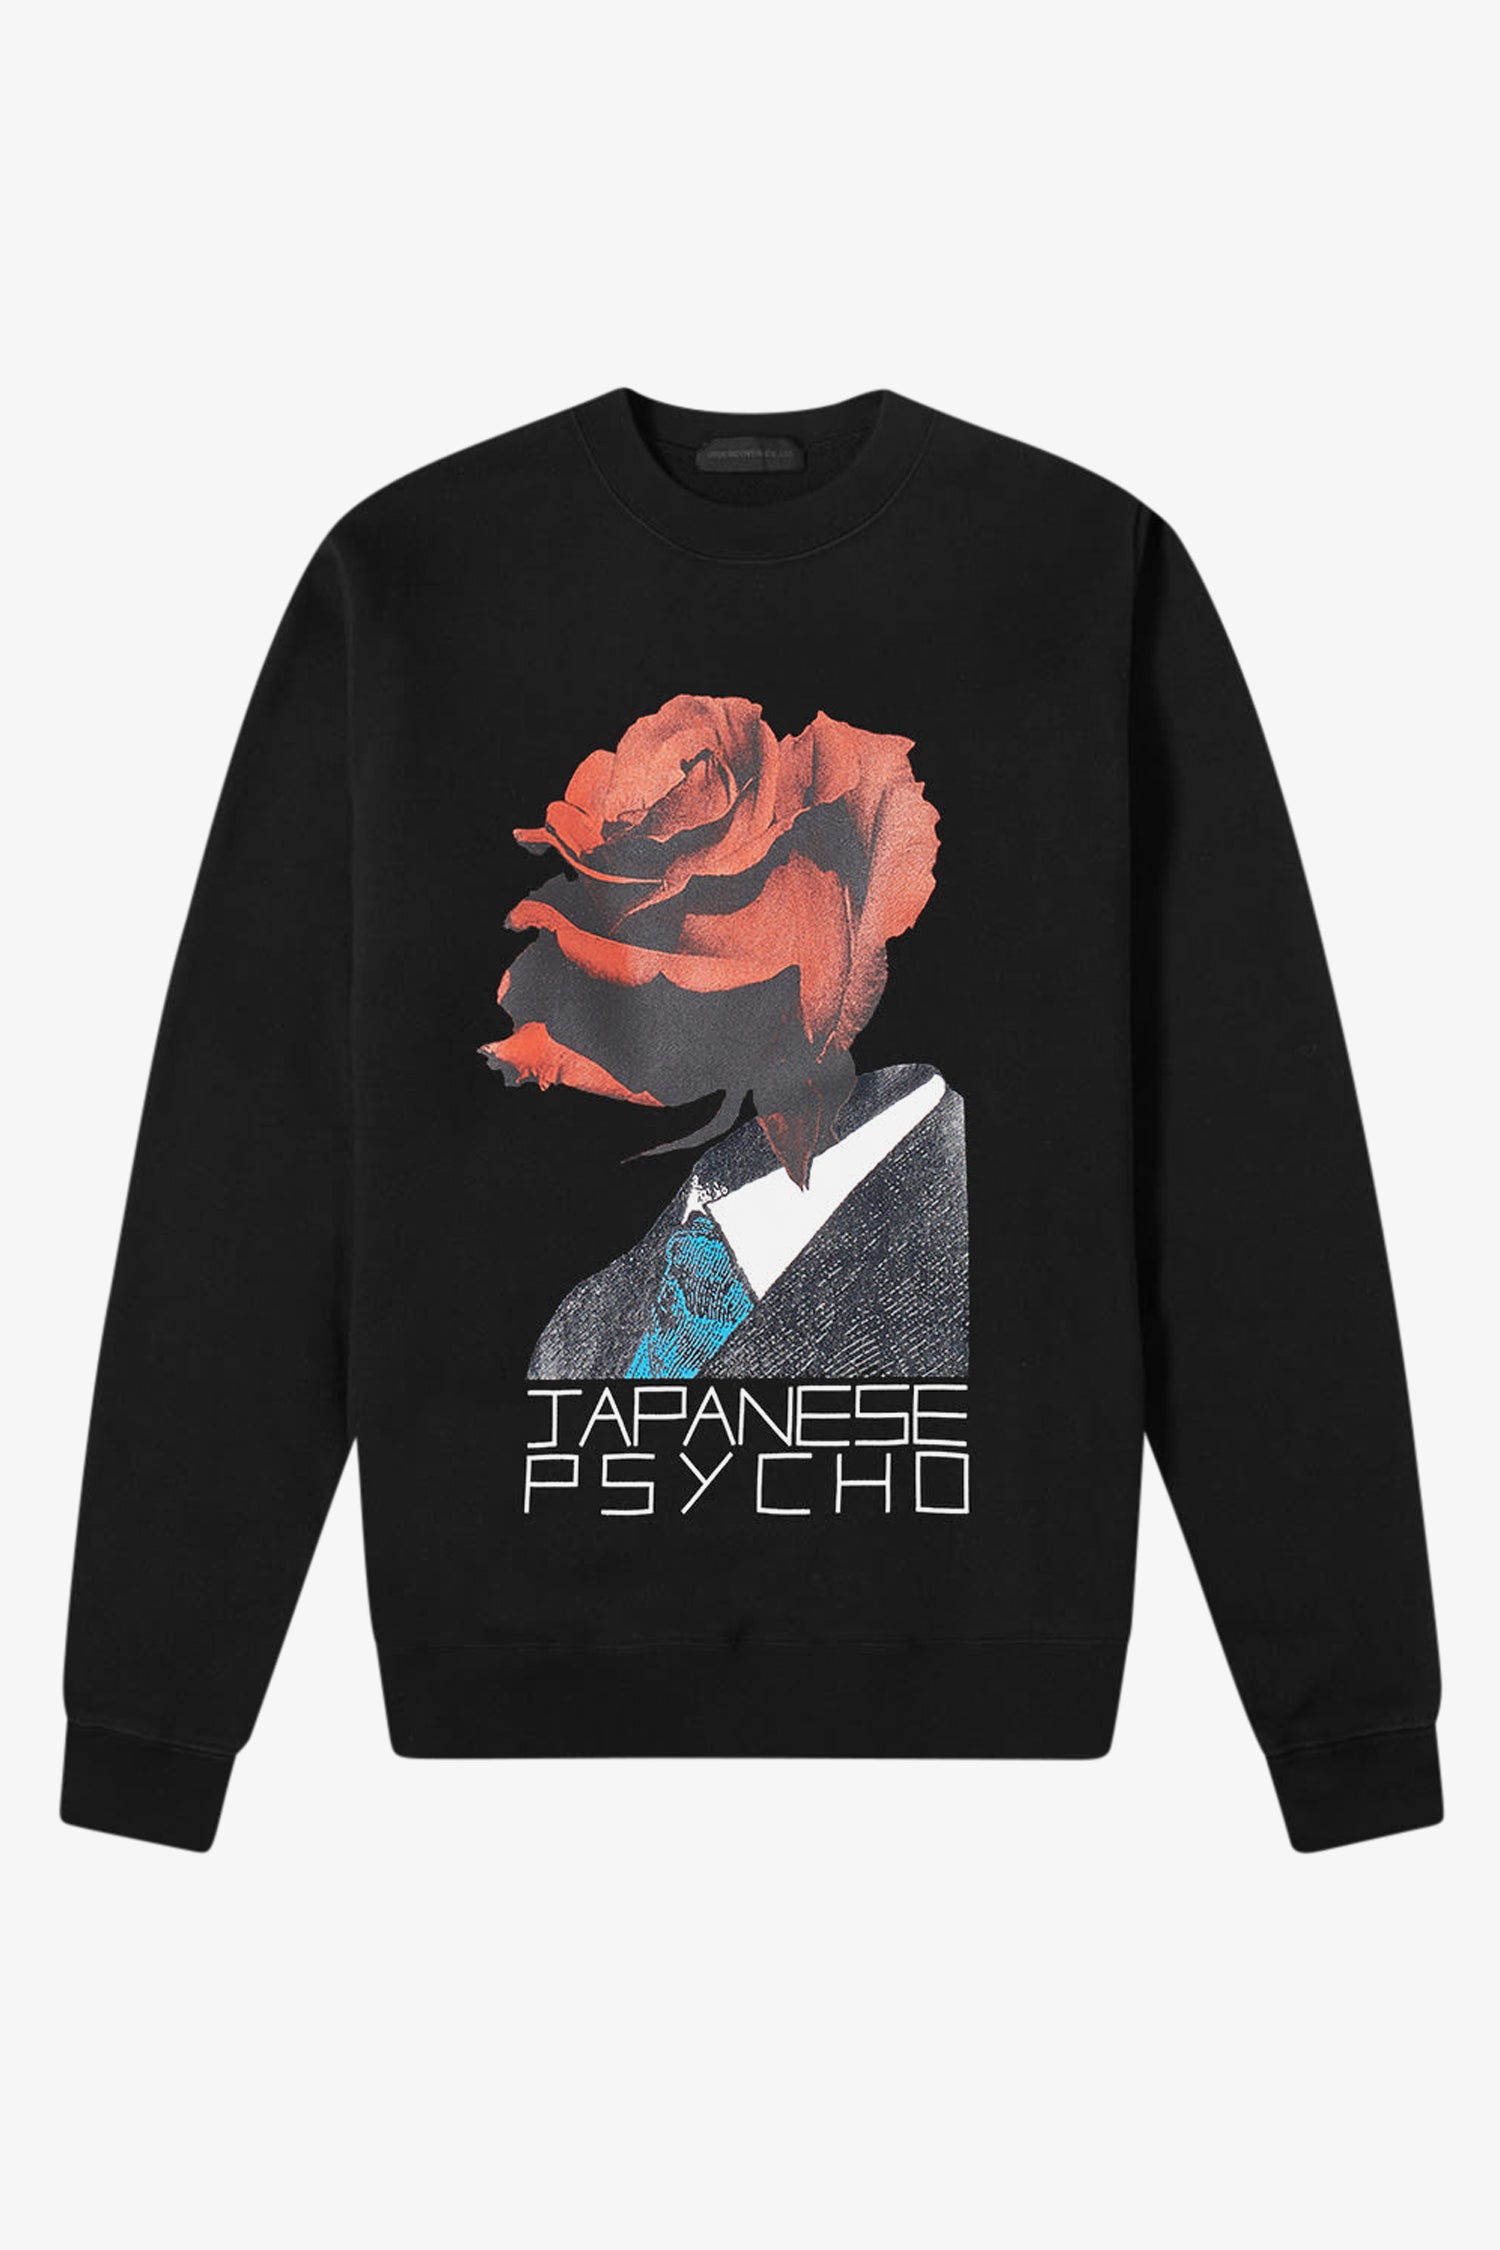 Selectshop FRAME - UNDERCOVER Japanese Psycho Sweatshirt Sweatshirts Dubai